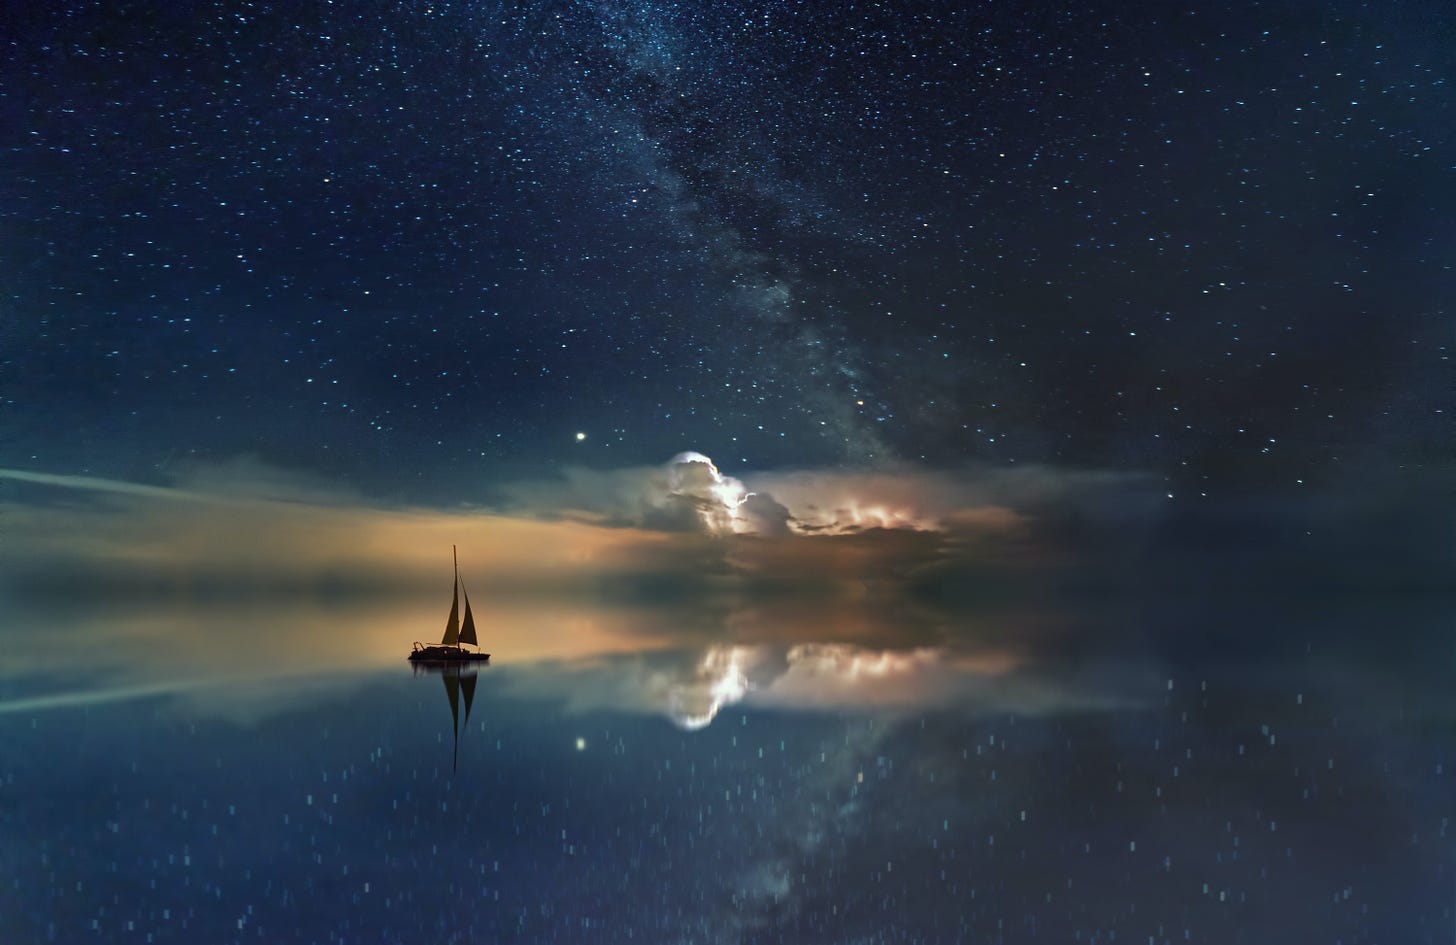 A boat drifting into a dreamscape